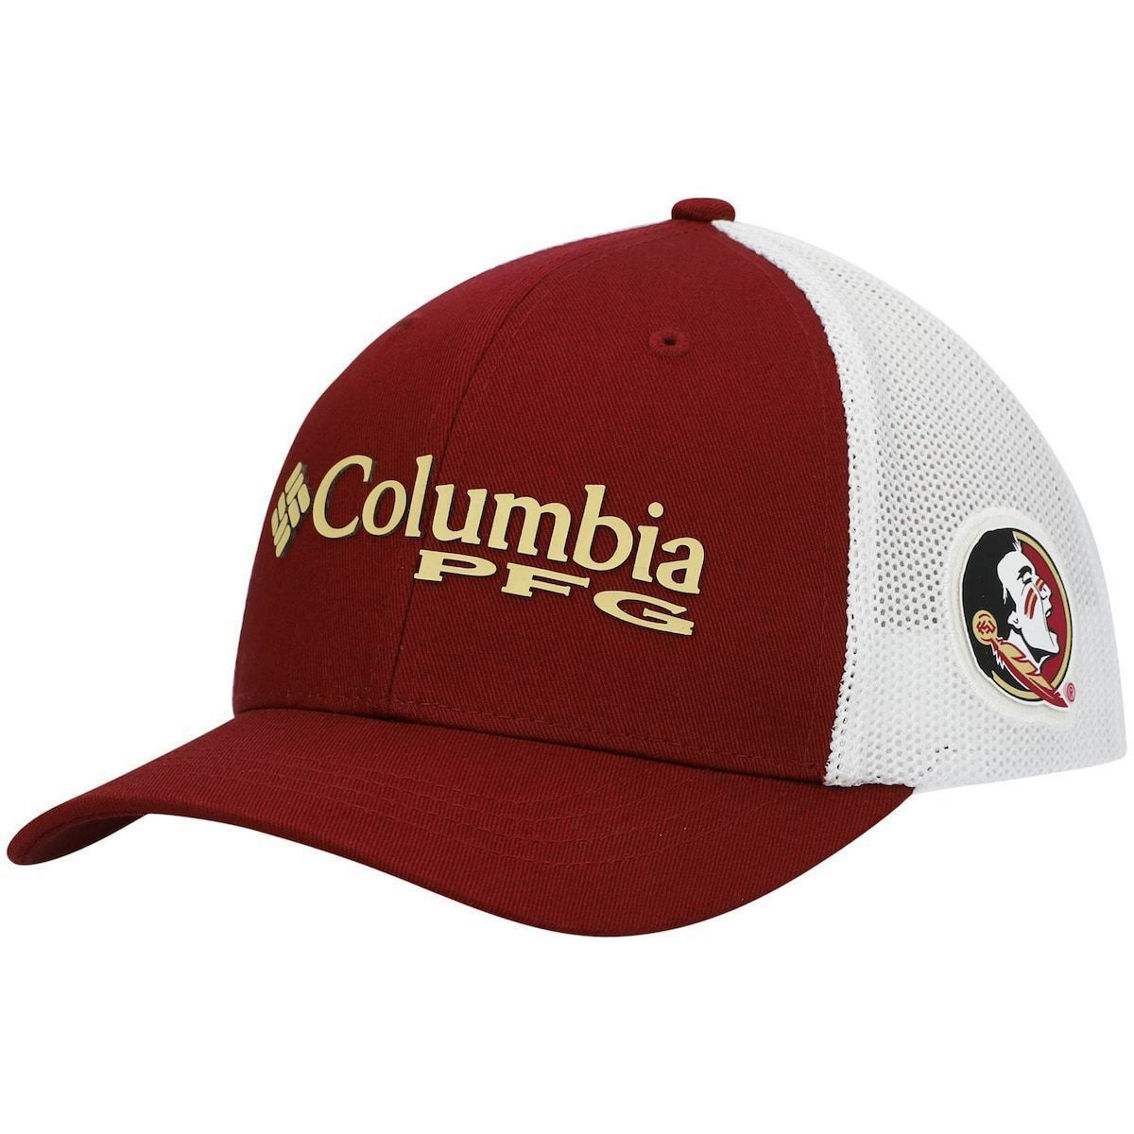 Youth Columbia Garnet Florida State Seminoles Collegiate PFG Snapback Hat - Image 1 of 4